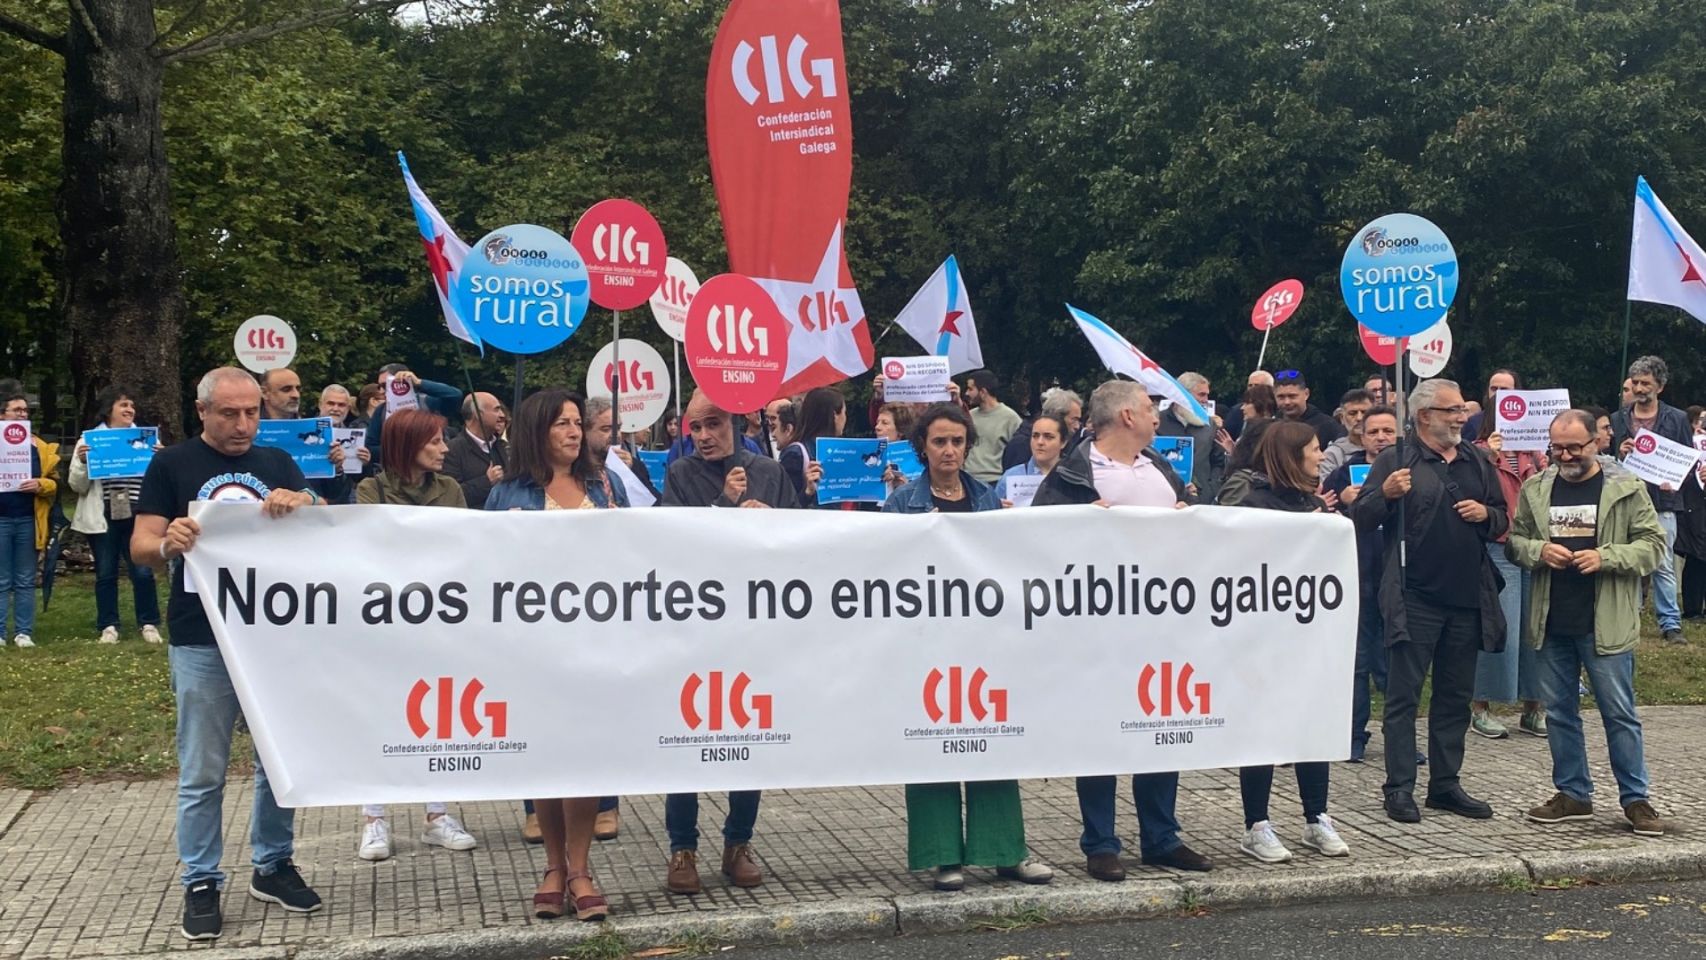 Protesta de la Plataforma Galega pola Defensa do Ensino por el recorte de profesorado